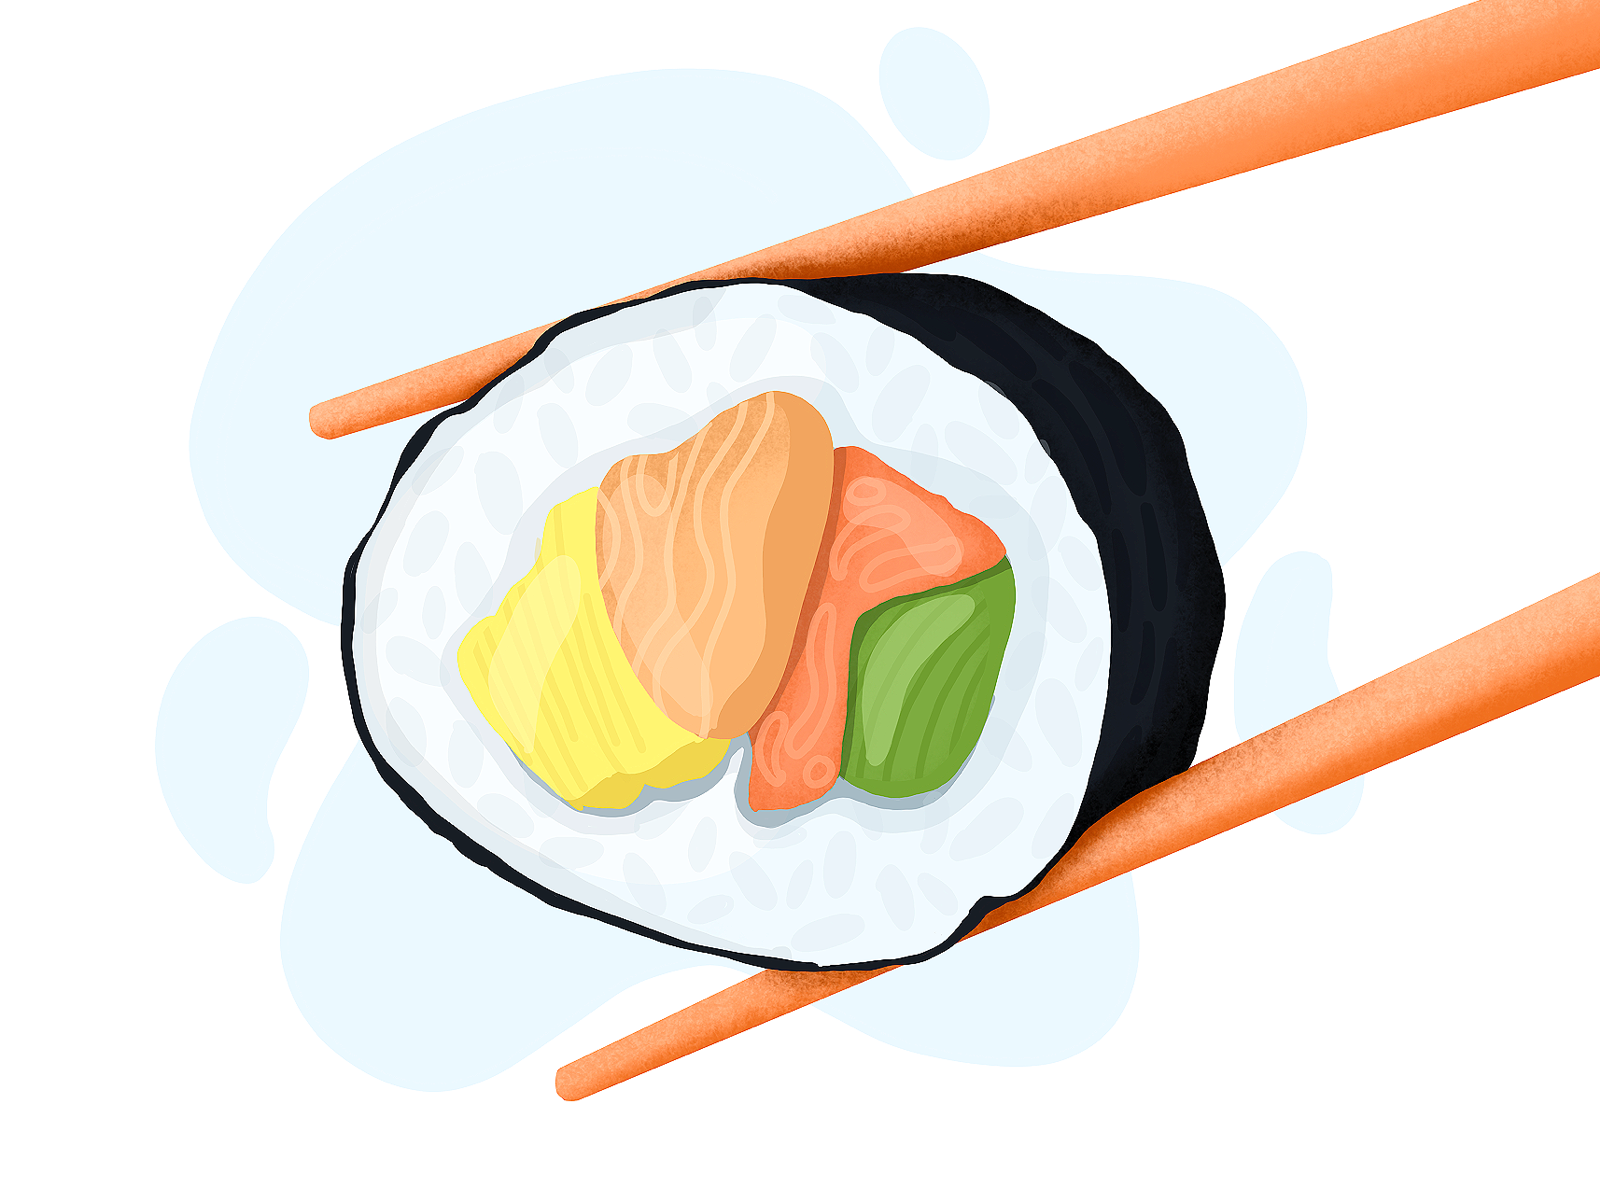 Sushi ðŸ £ illustration by Angel Villanueva for Unrise on Dribbble